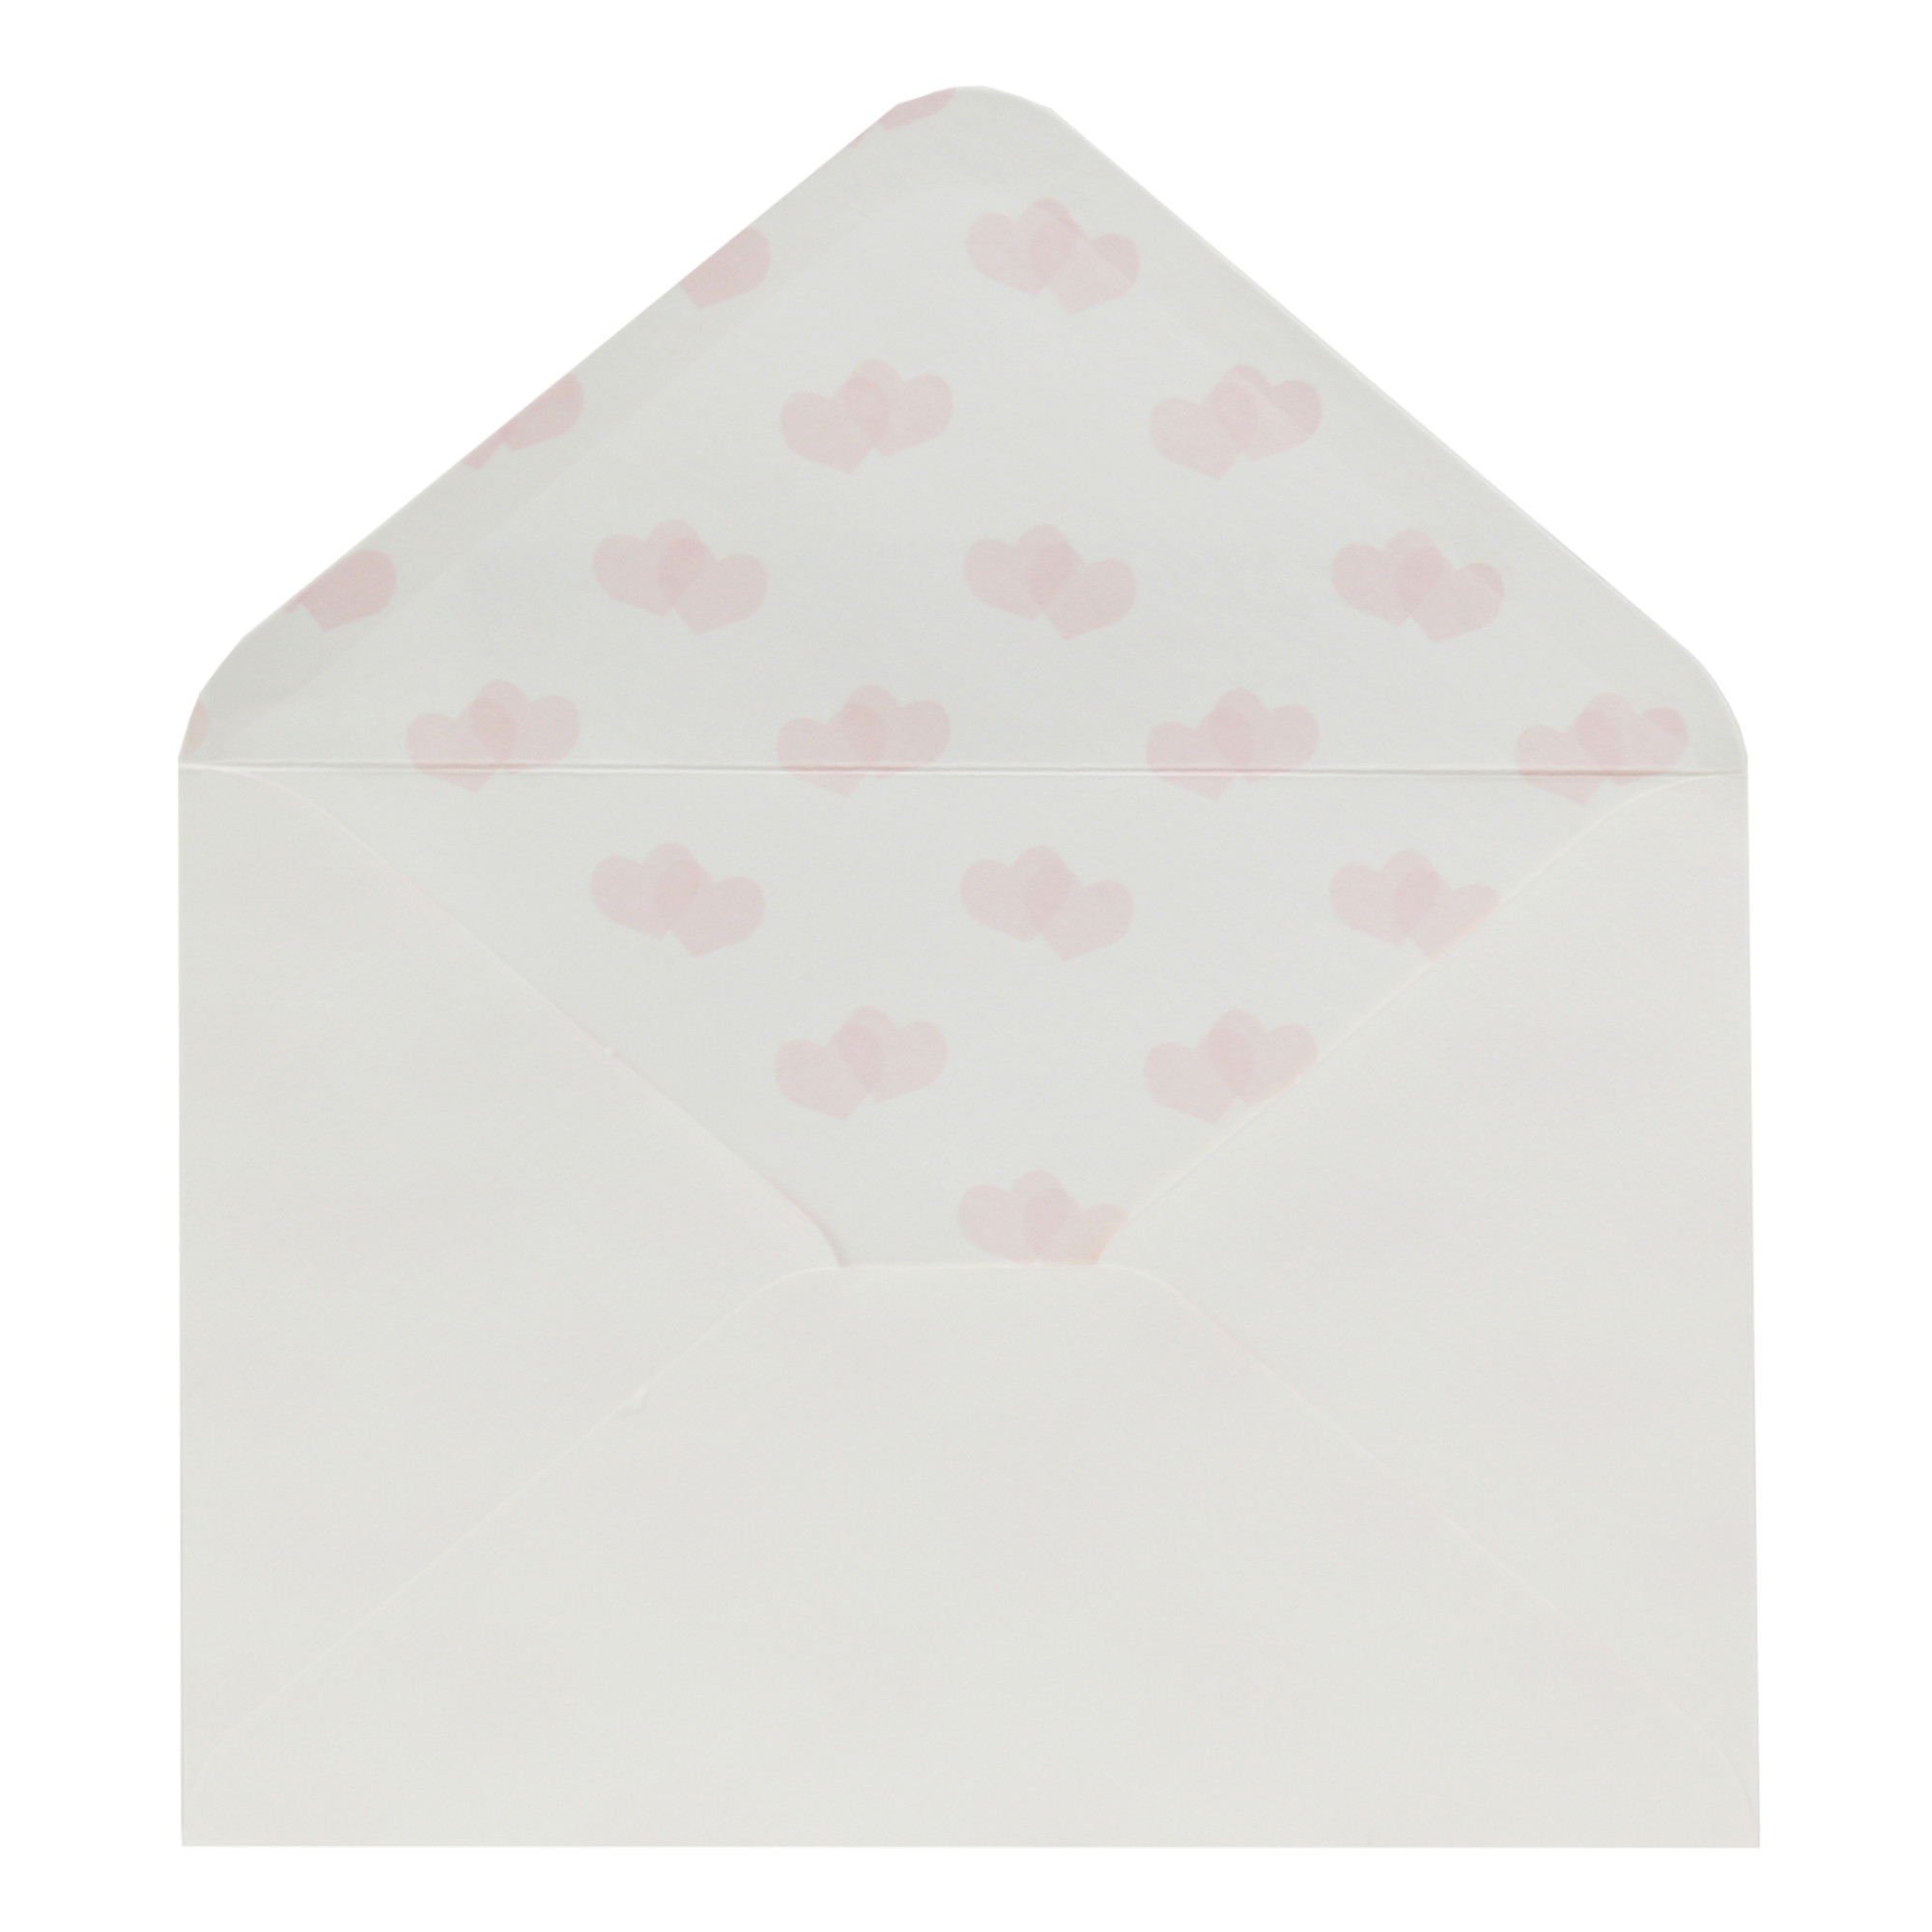 4 5/8 x 6 1/4 (A6 Size) Envelopes 25 Pack Thick Bright White Vellum Finish